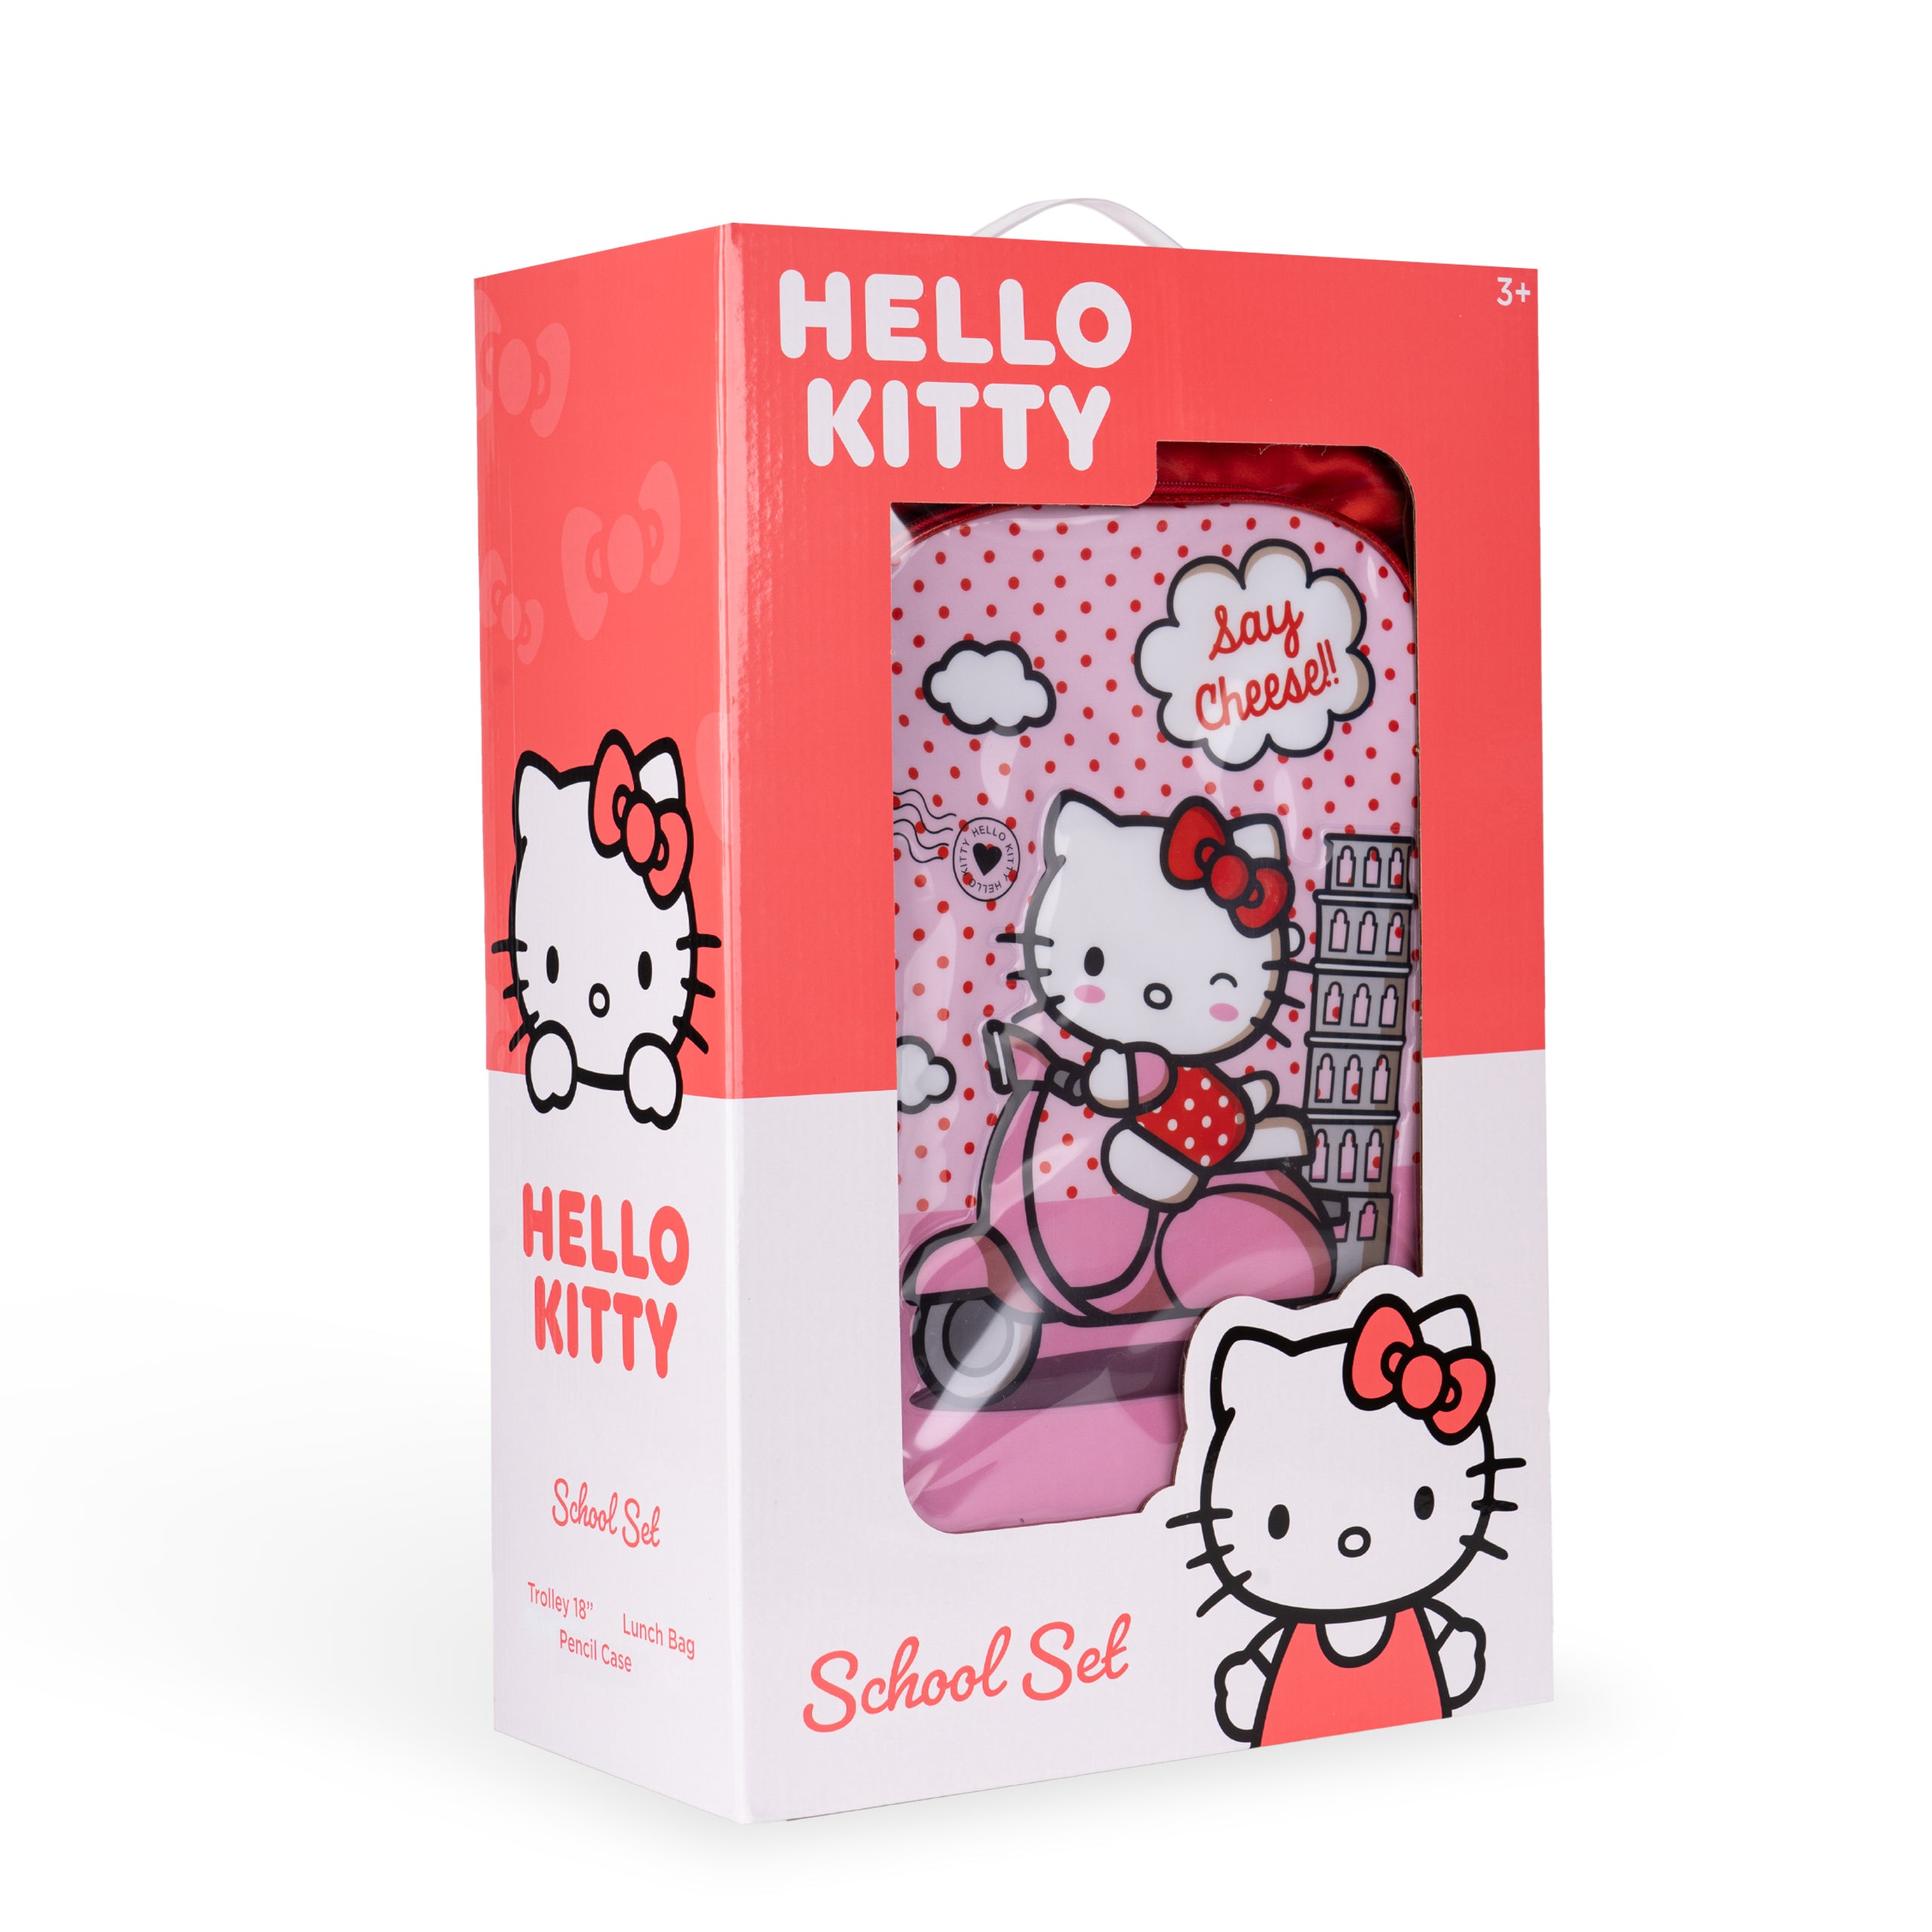 Sanrio Hello Kitty Say Cheese 3in1 Trolley Box set 18"